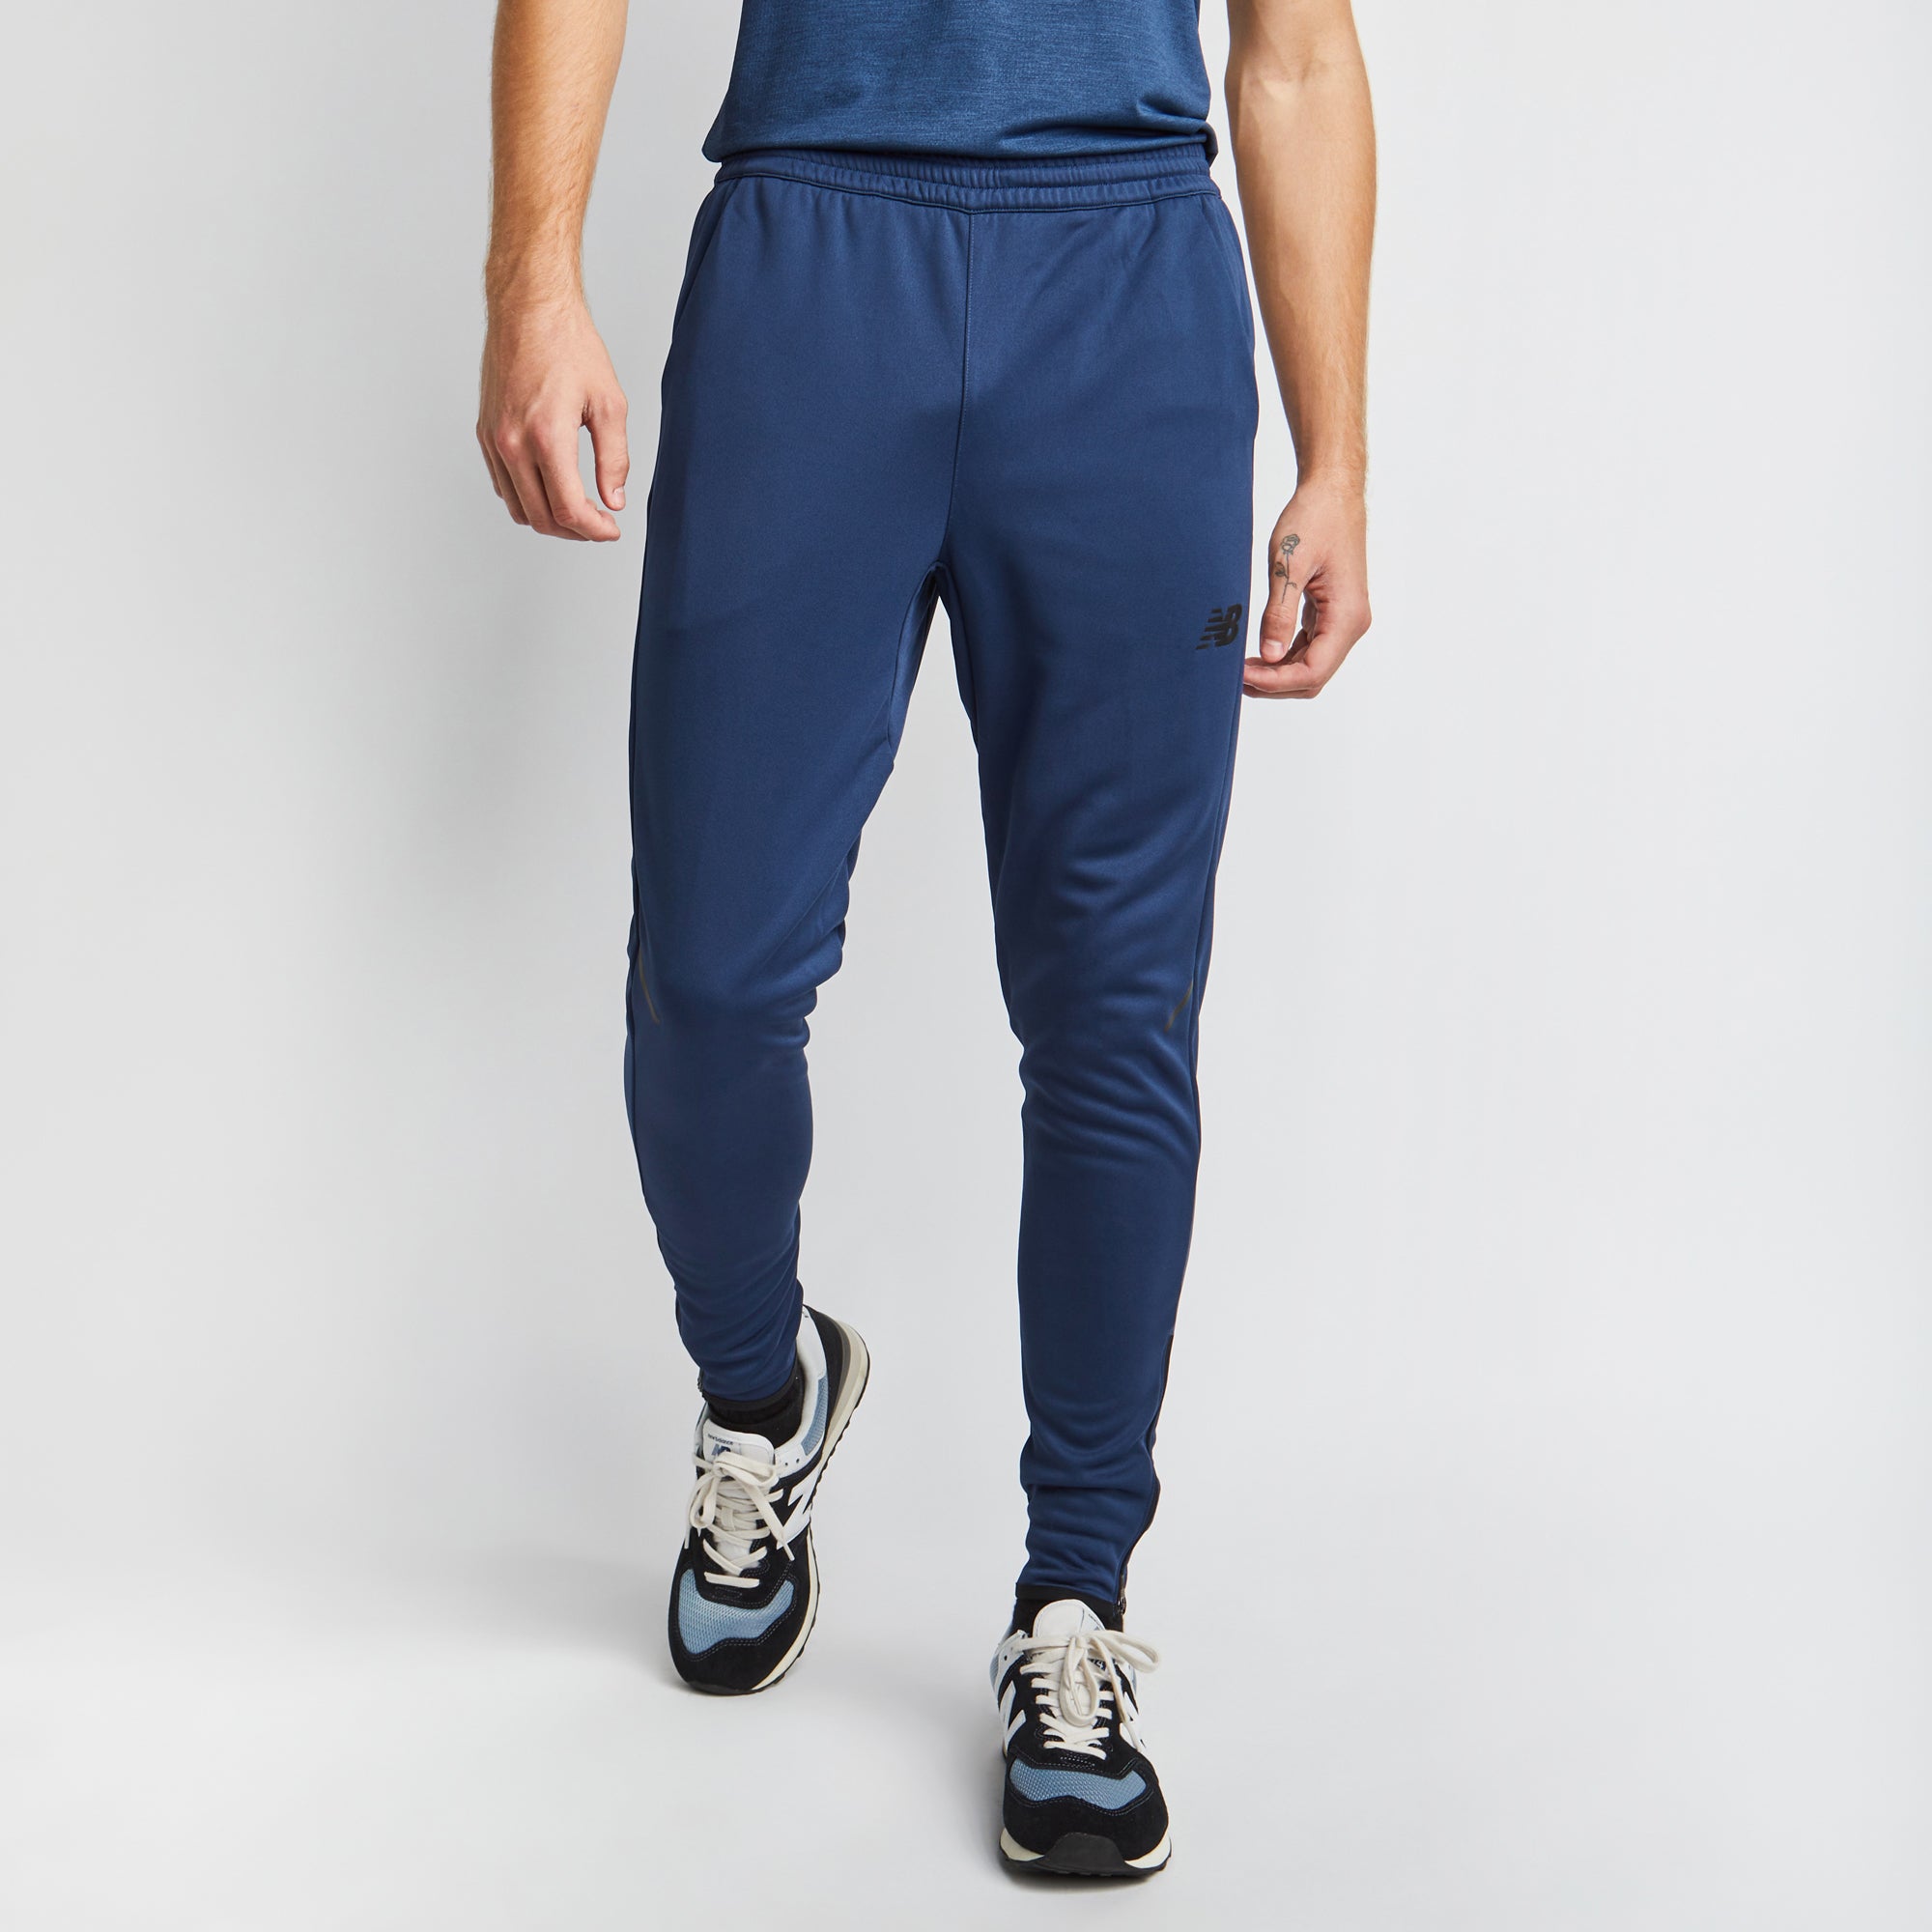 New Balance Tenacity Knit Men's Pants - Free Shipping